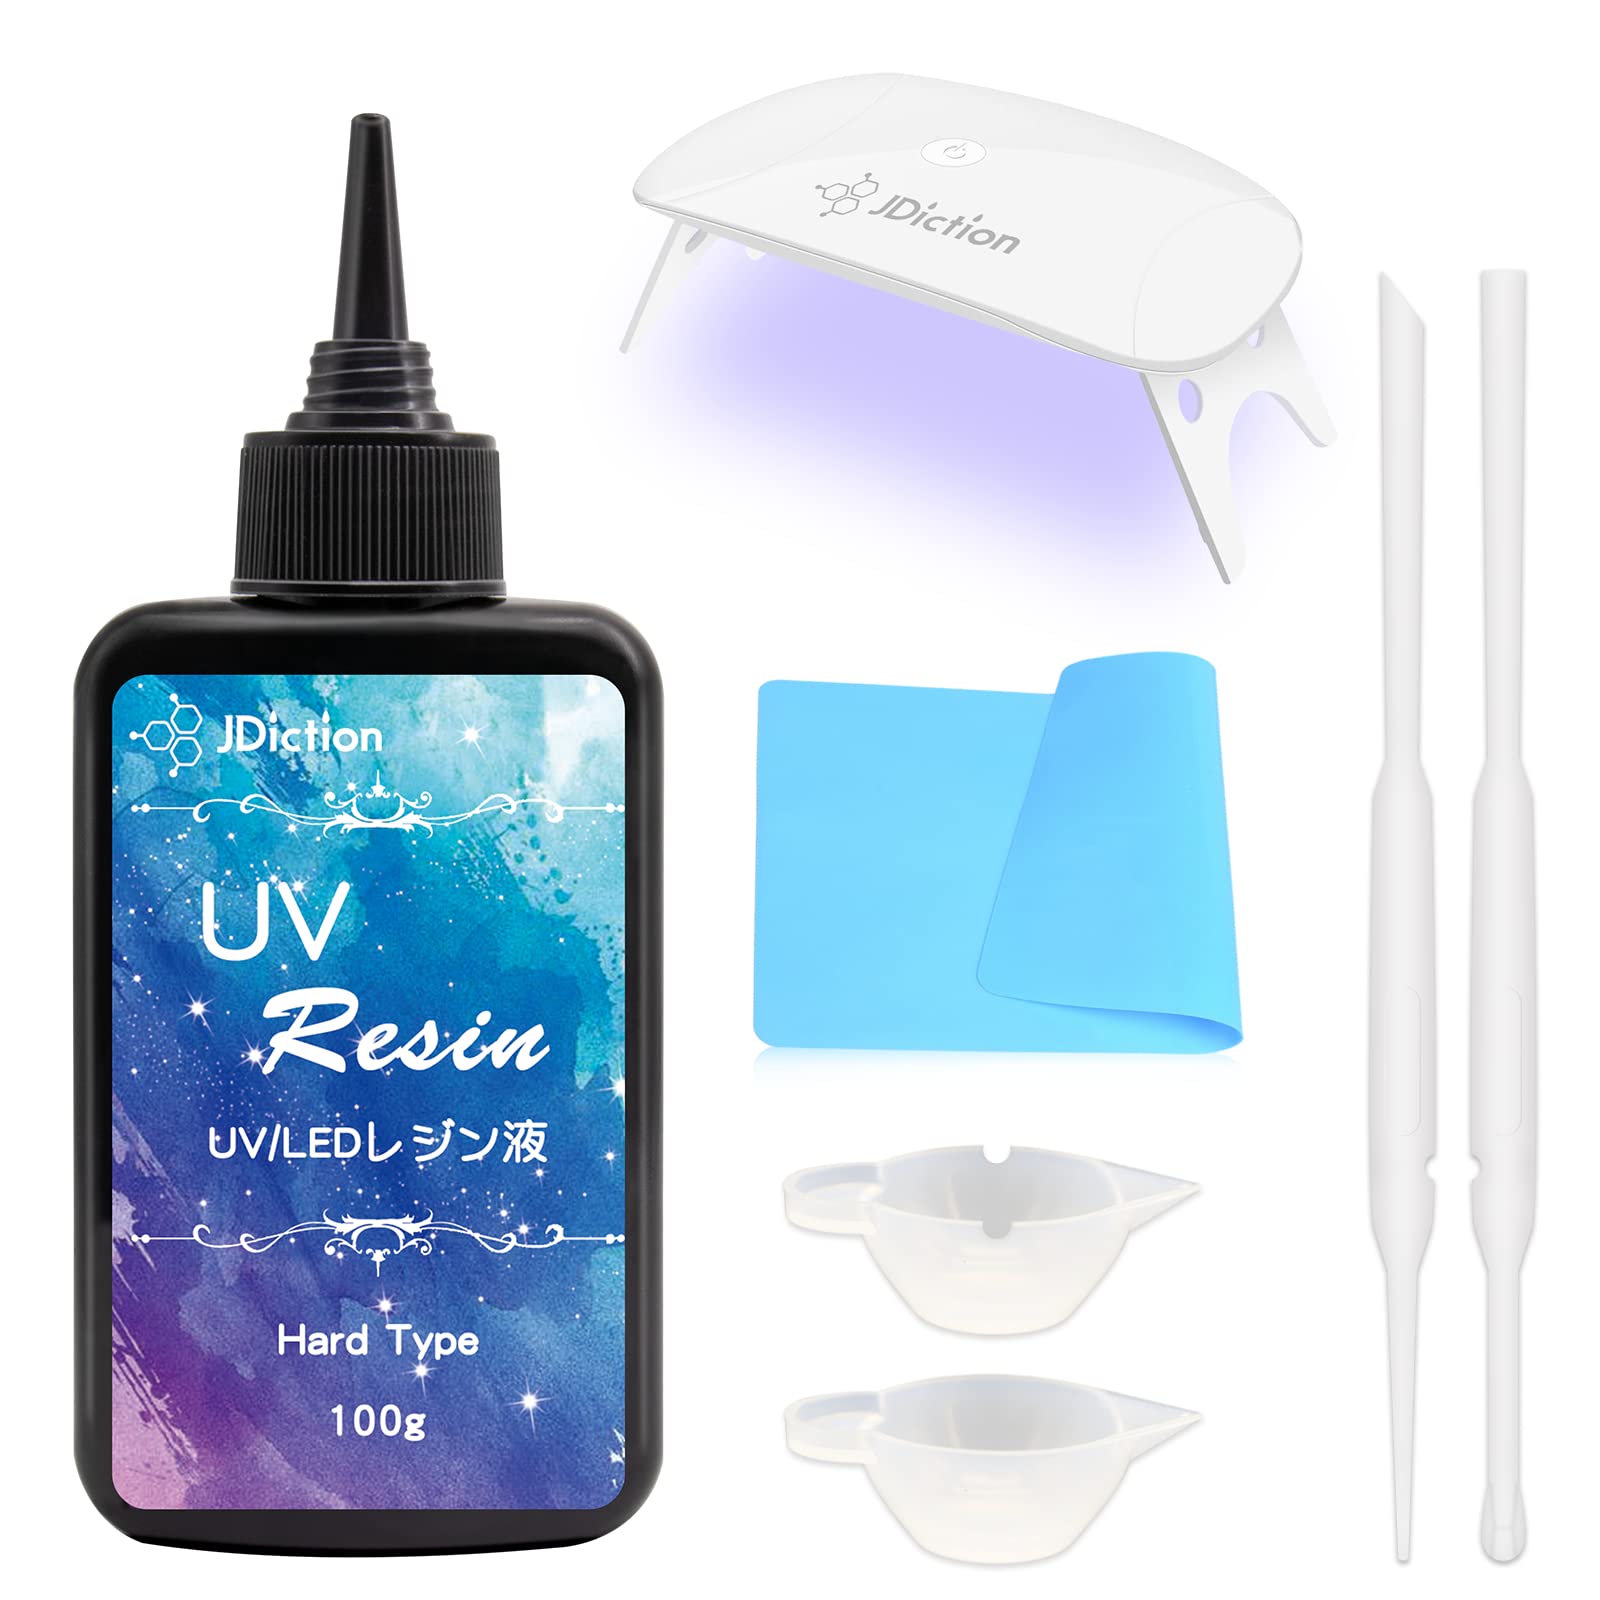 JD-CA-UV-02 JDiction UV Resin Kit with Light, Crystal Clear Hard Resin Glue  Sunlight Curing UV Resin Starter Kit for Doming, Coating, and Ca